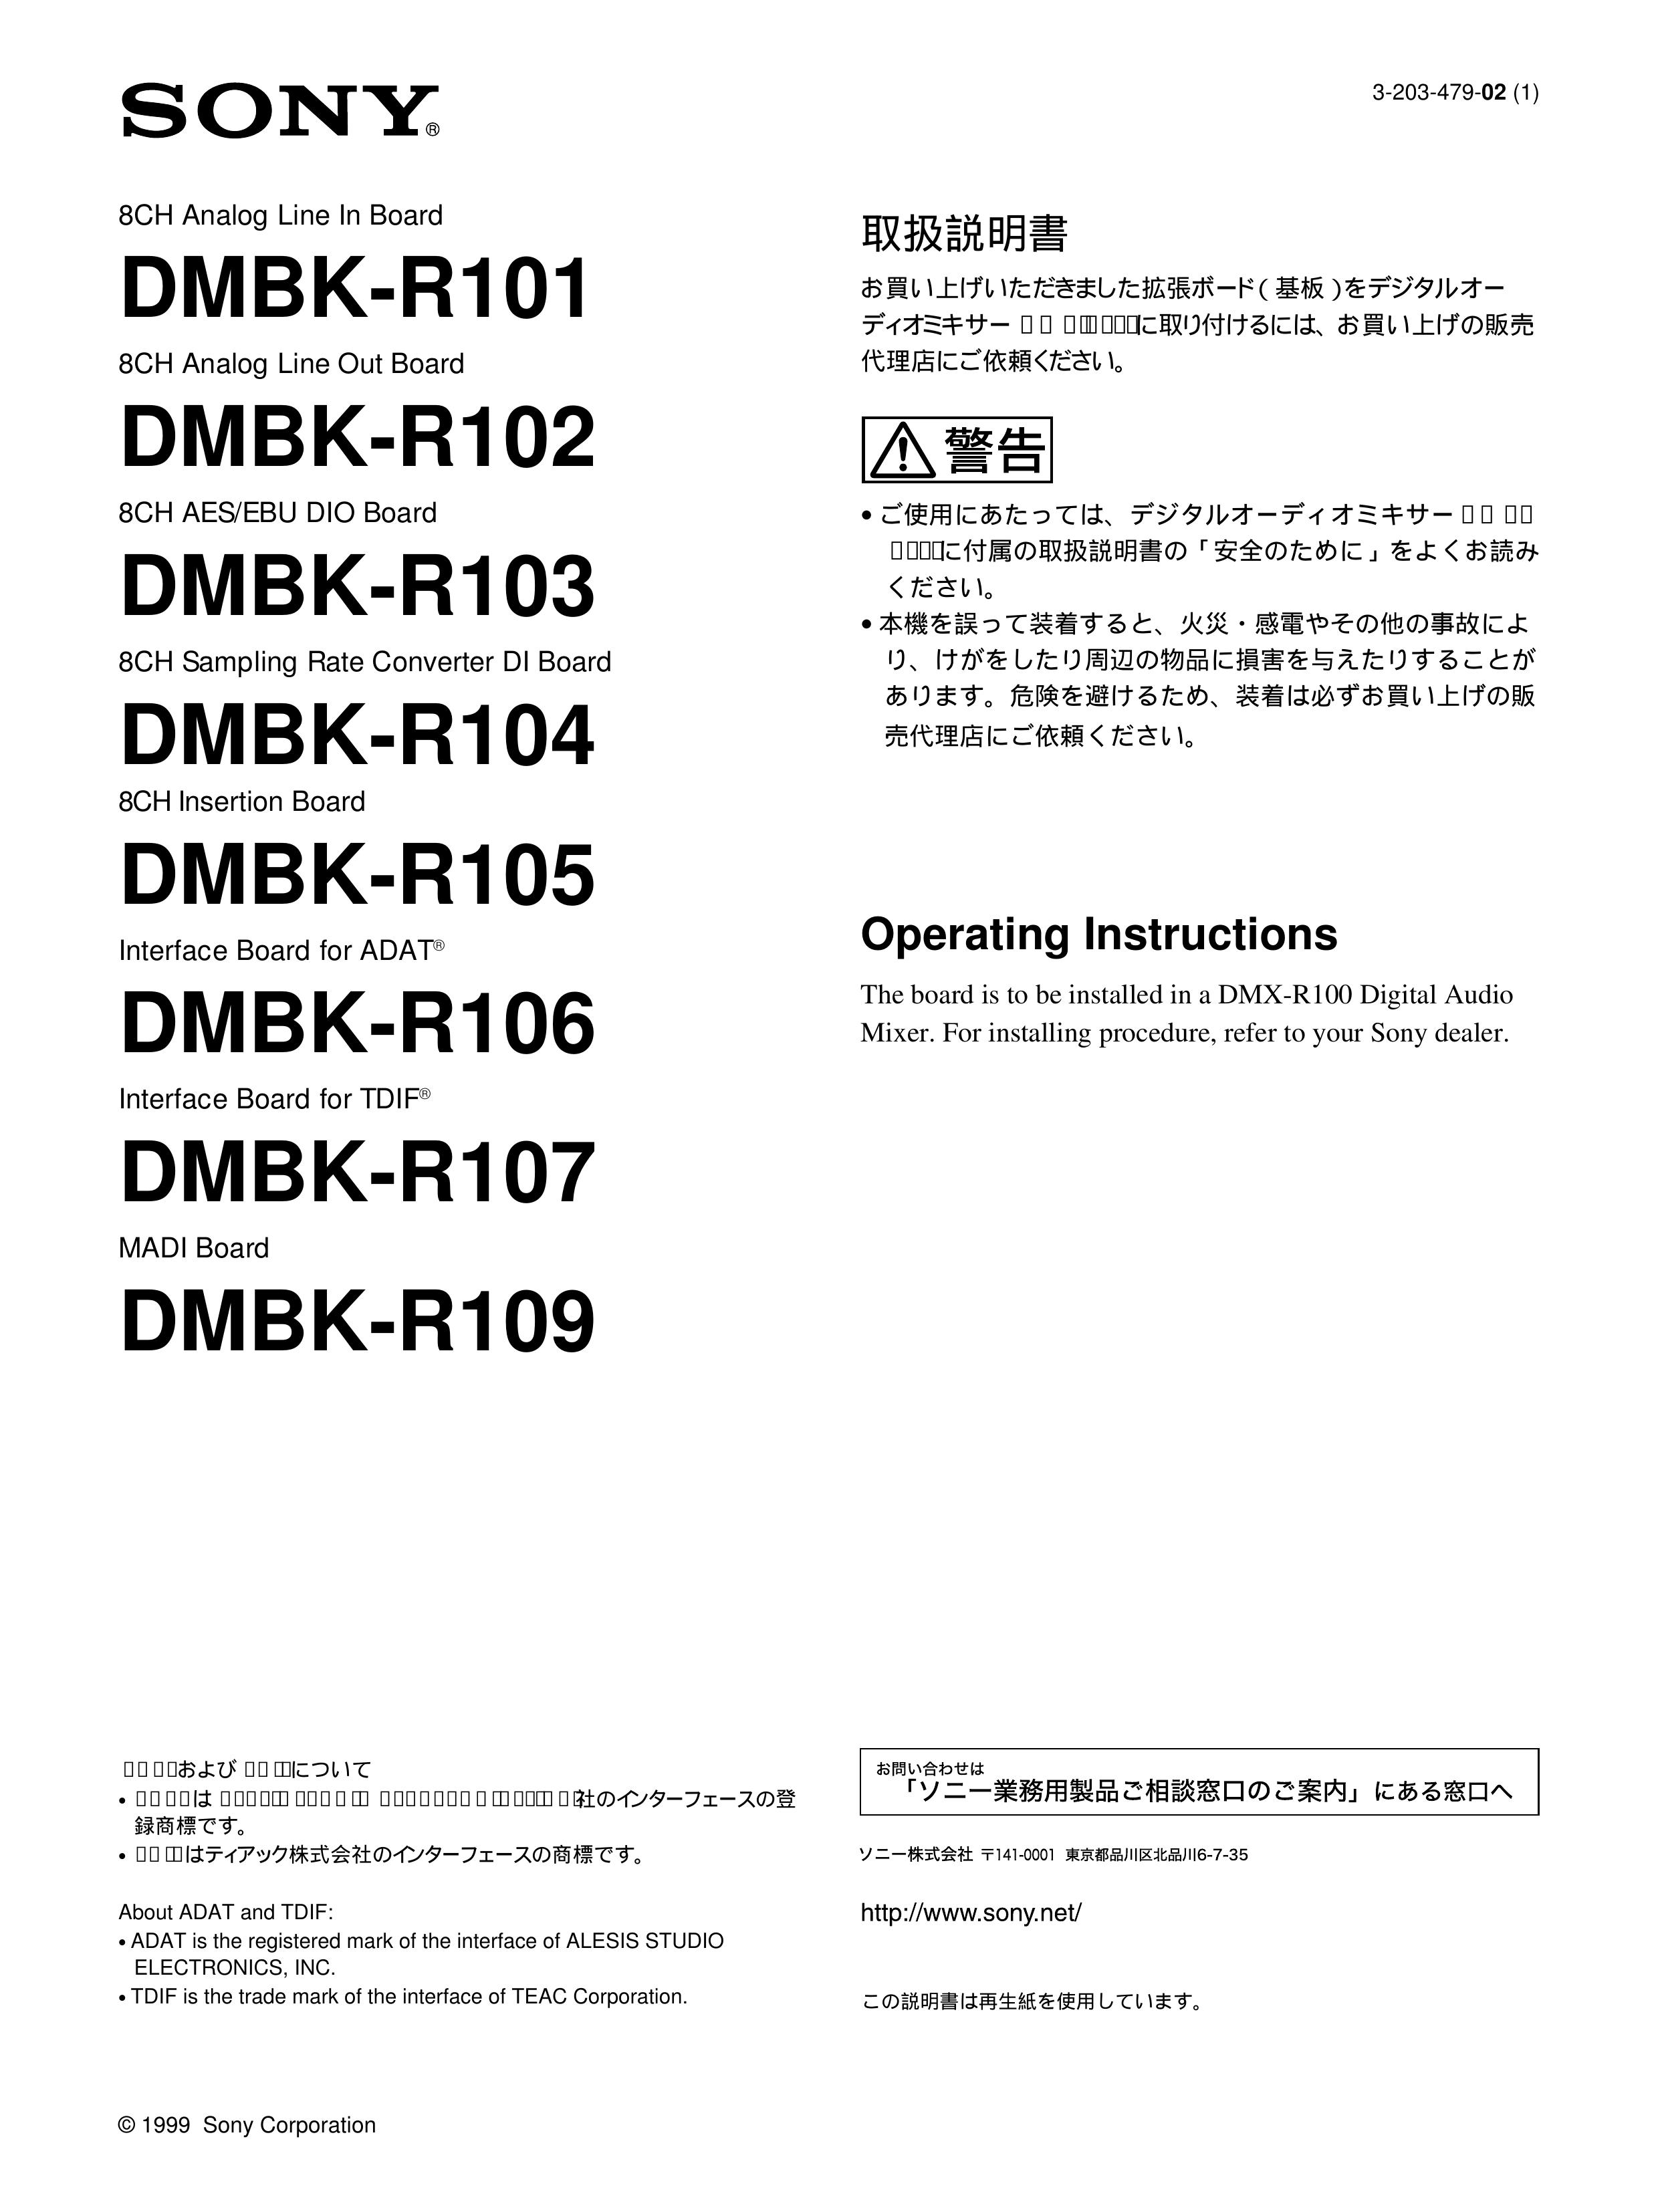 Sony DMBK-R103 Music Mixer User Manual